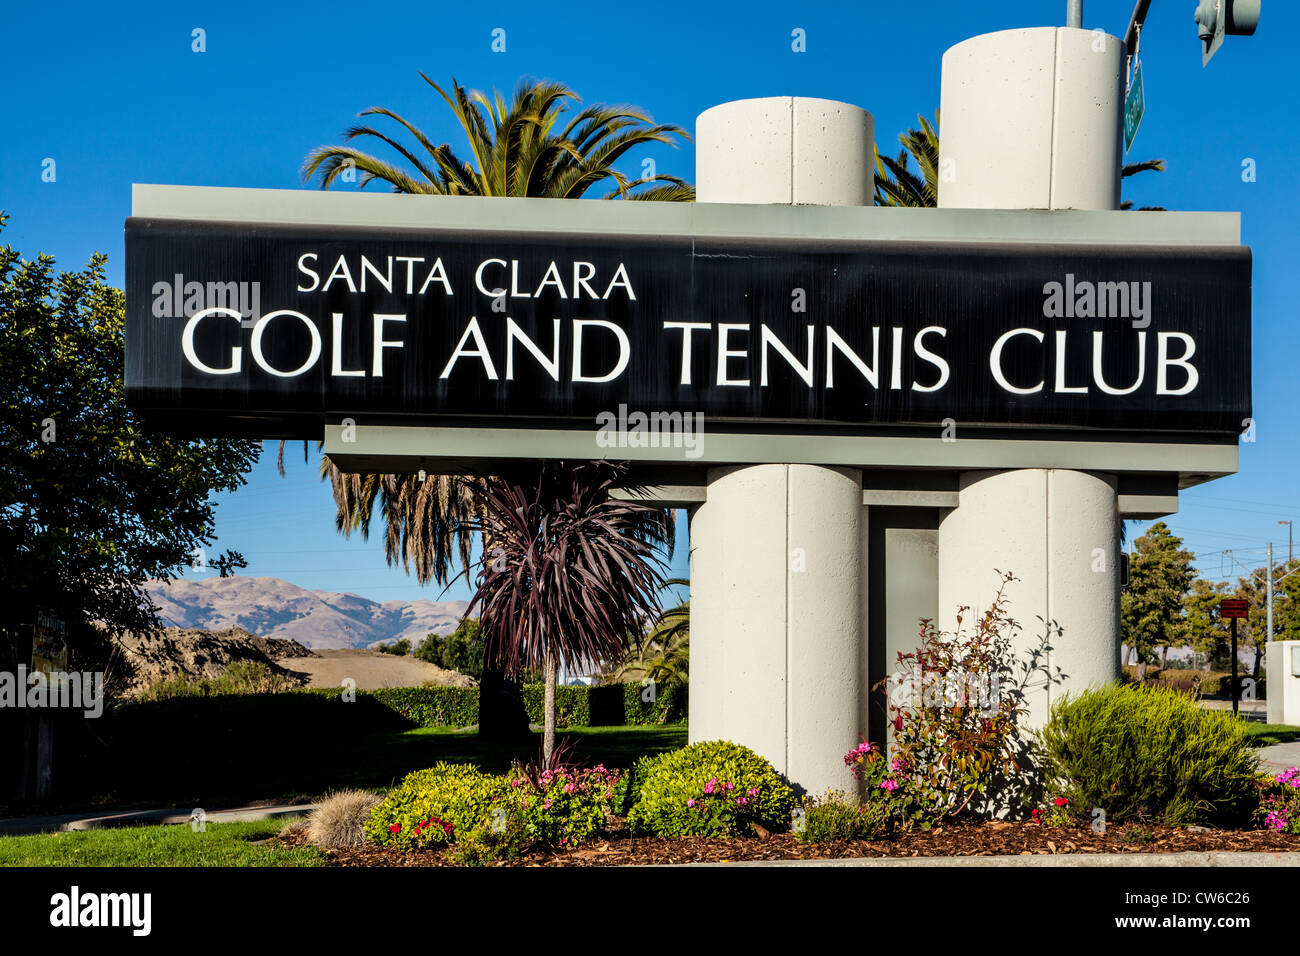 Santa Clara Golf and Tennis Club Stock Photo - Alamy